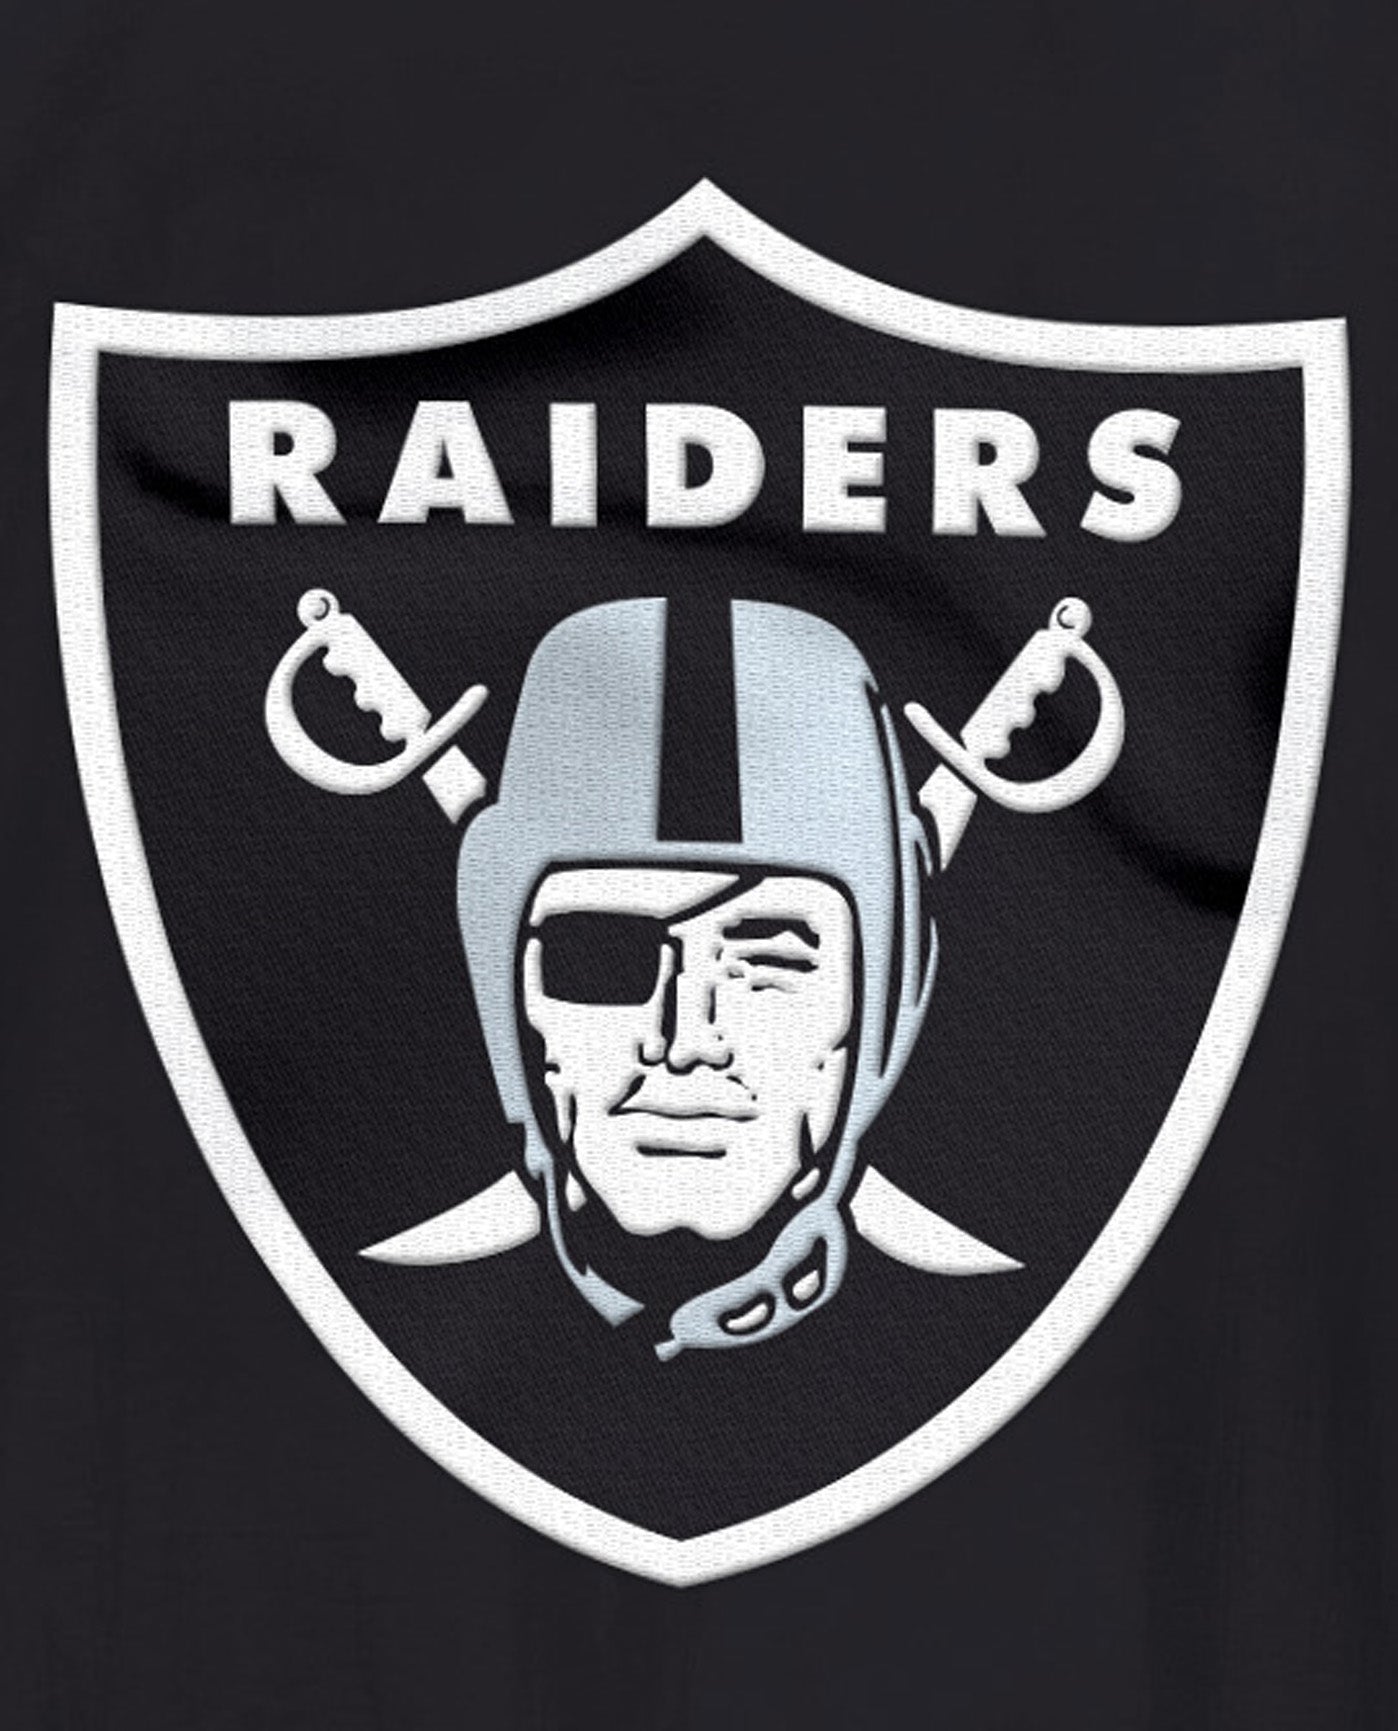 Raiders Jacket Vegas NFL 2022 Starter Hooded Half Zip Pullover 3X 4X 5X 6X